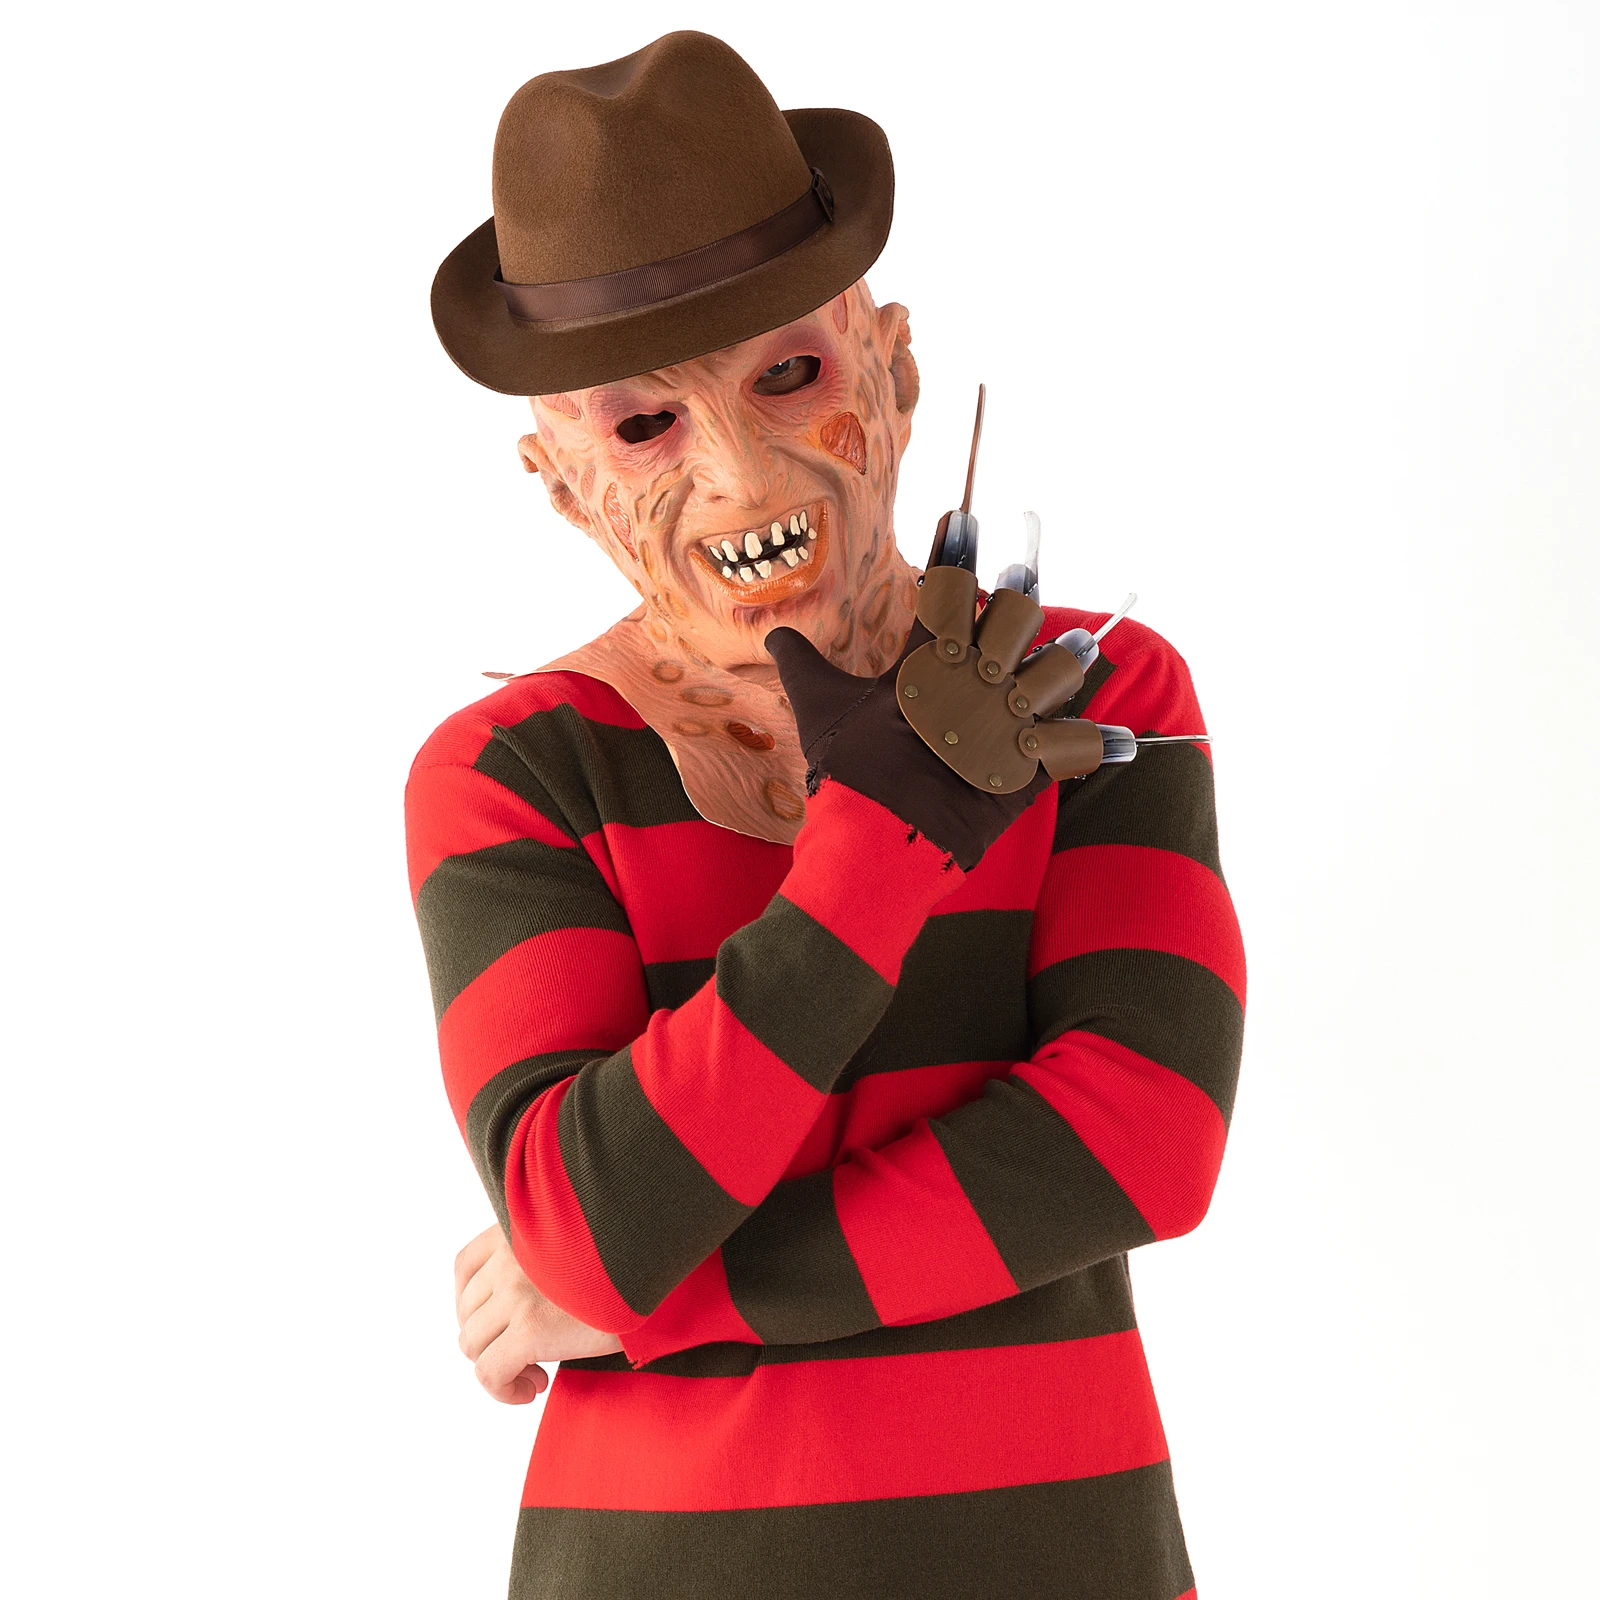 Freddie Krueger Halloween Costume Cosplay Costume Red Striped Knitting Top Coat Hat Mask for Men Adult Freddy Krueger Sweater